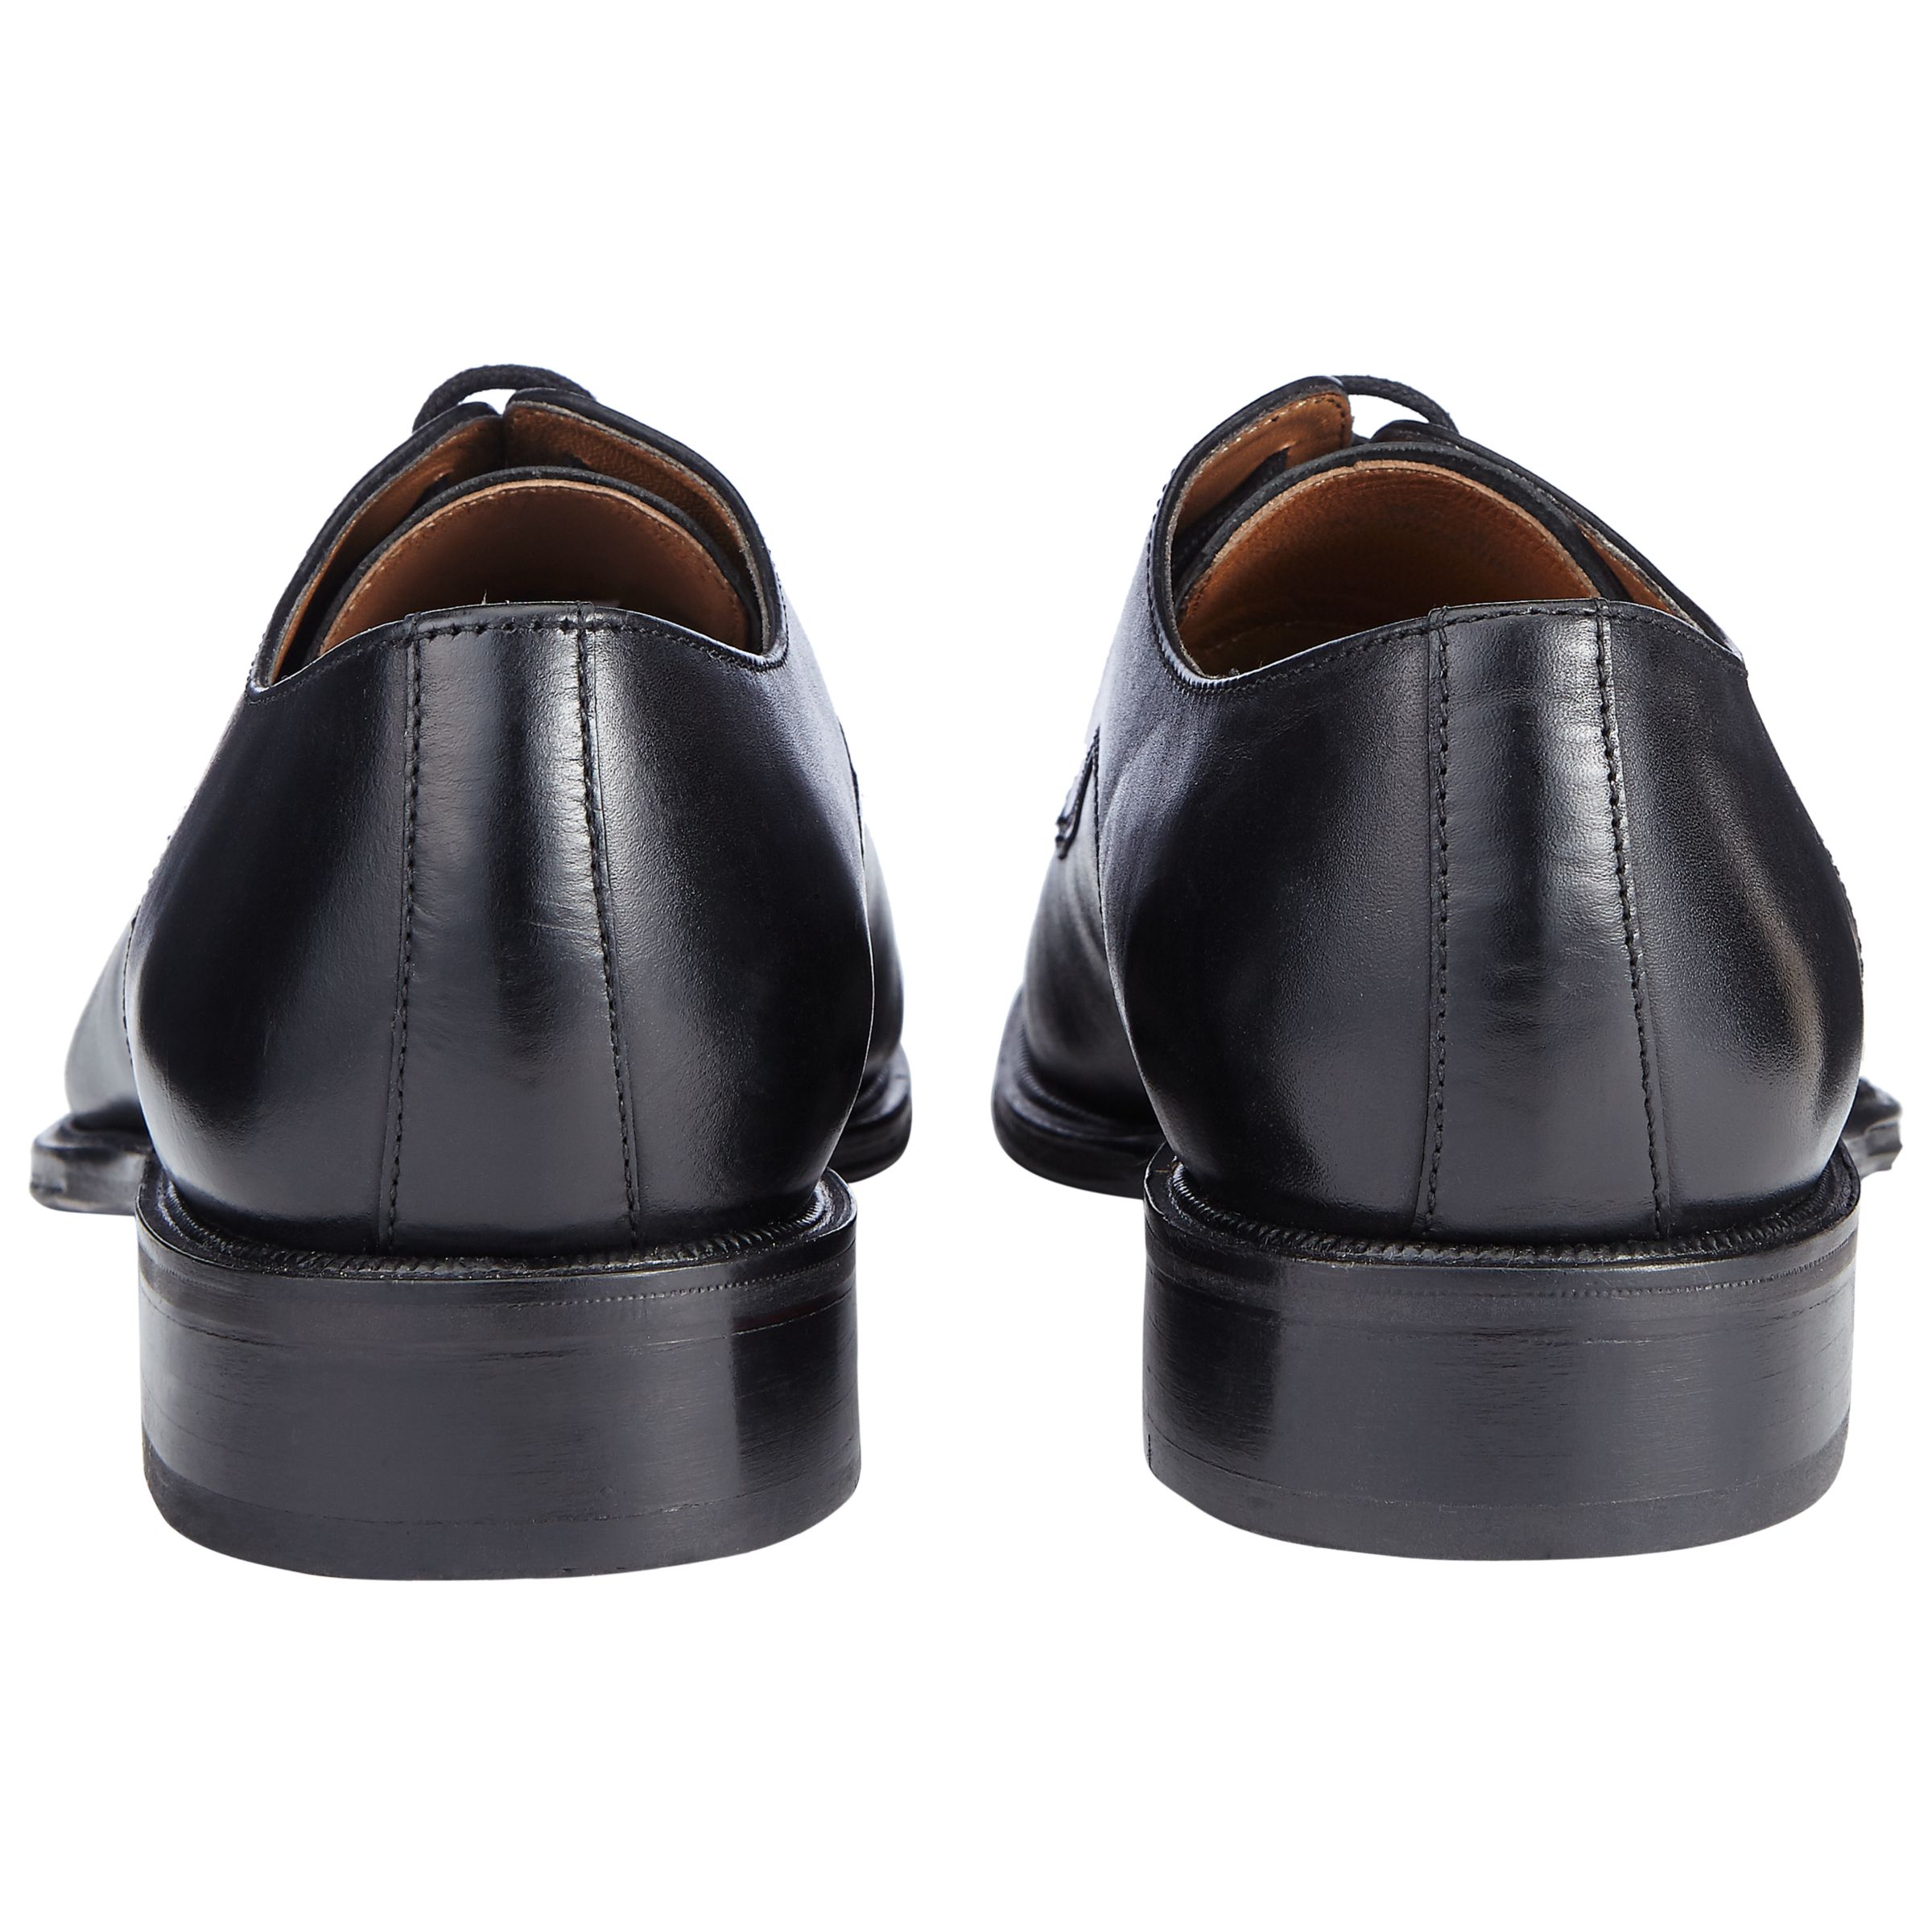 John Lewis & Partners Haslett Leather Derby Shoes, Black